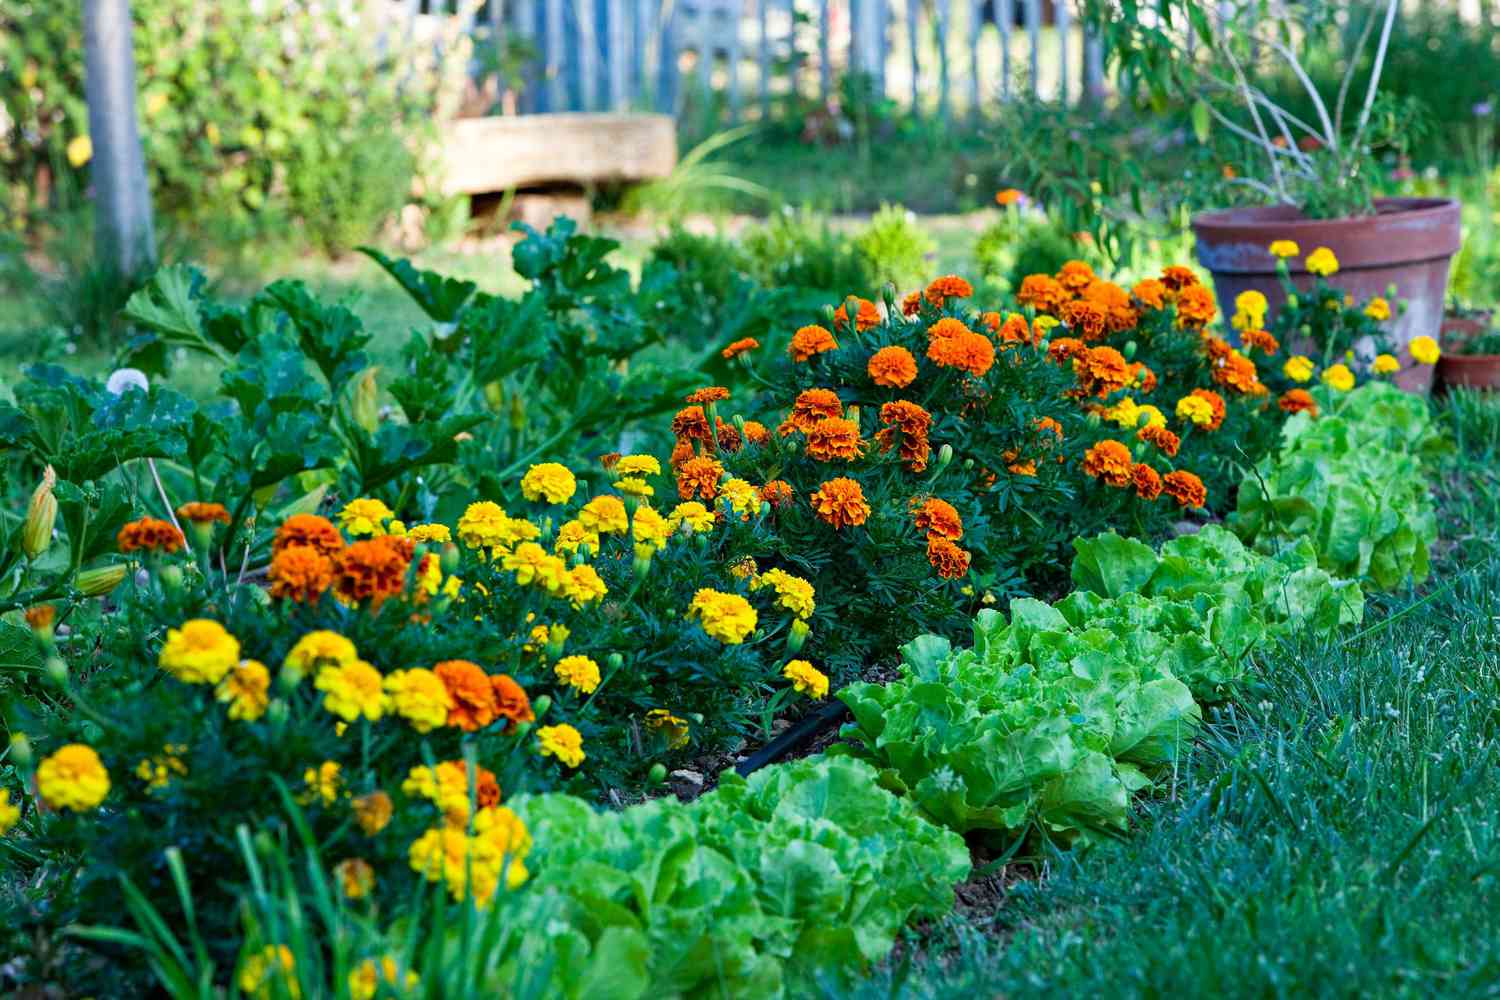 marigolds in garden next to lettuce